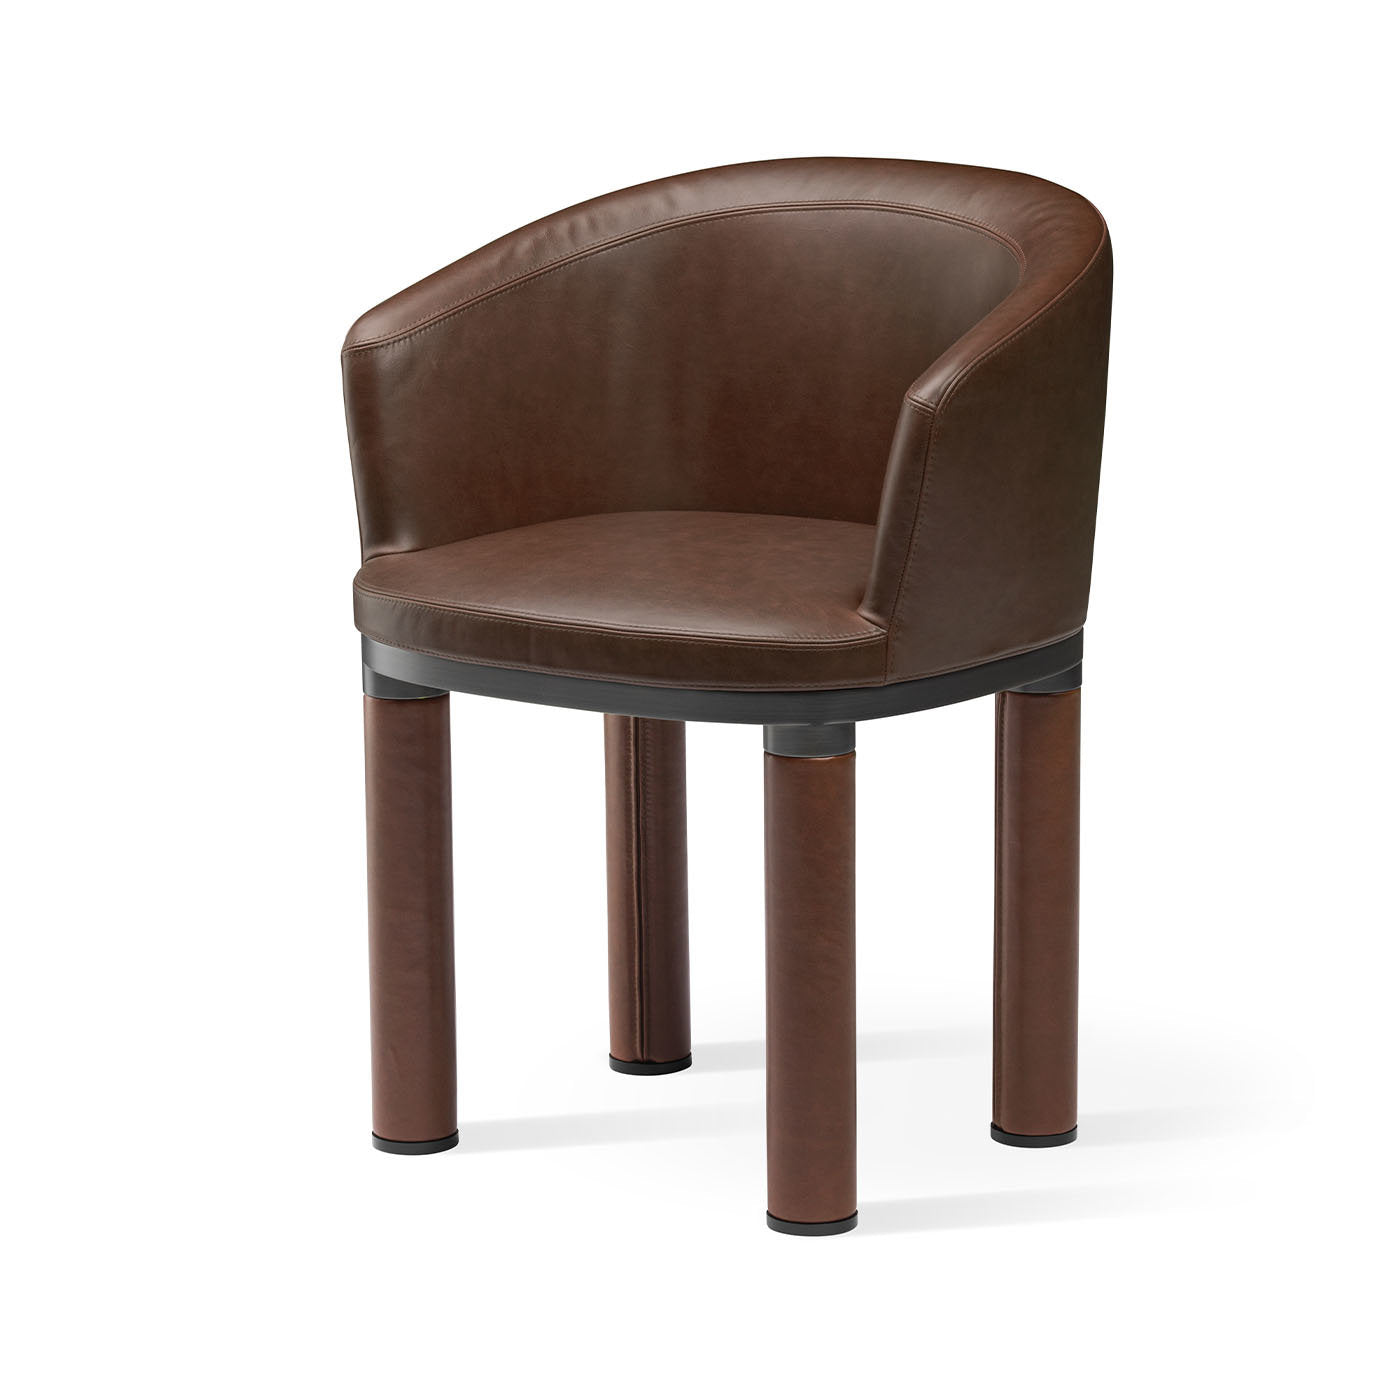 Bold Brown chair - Alternative view 1